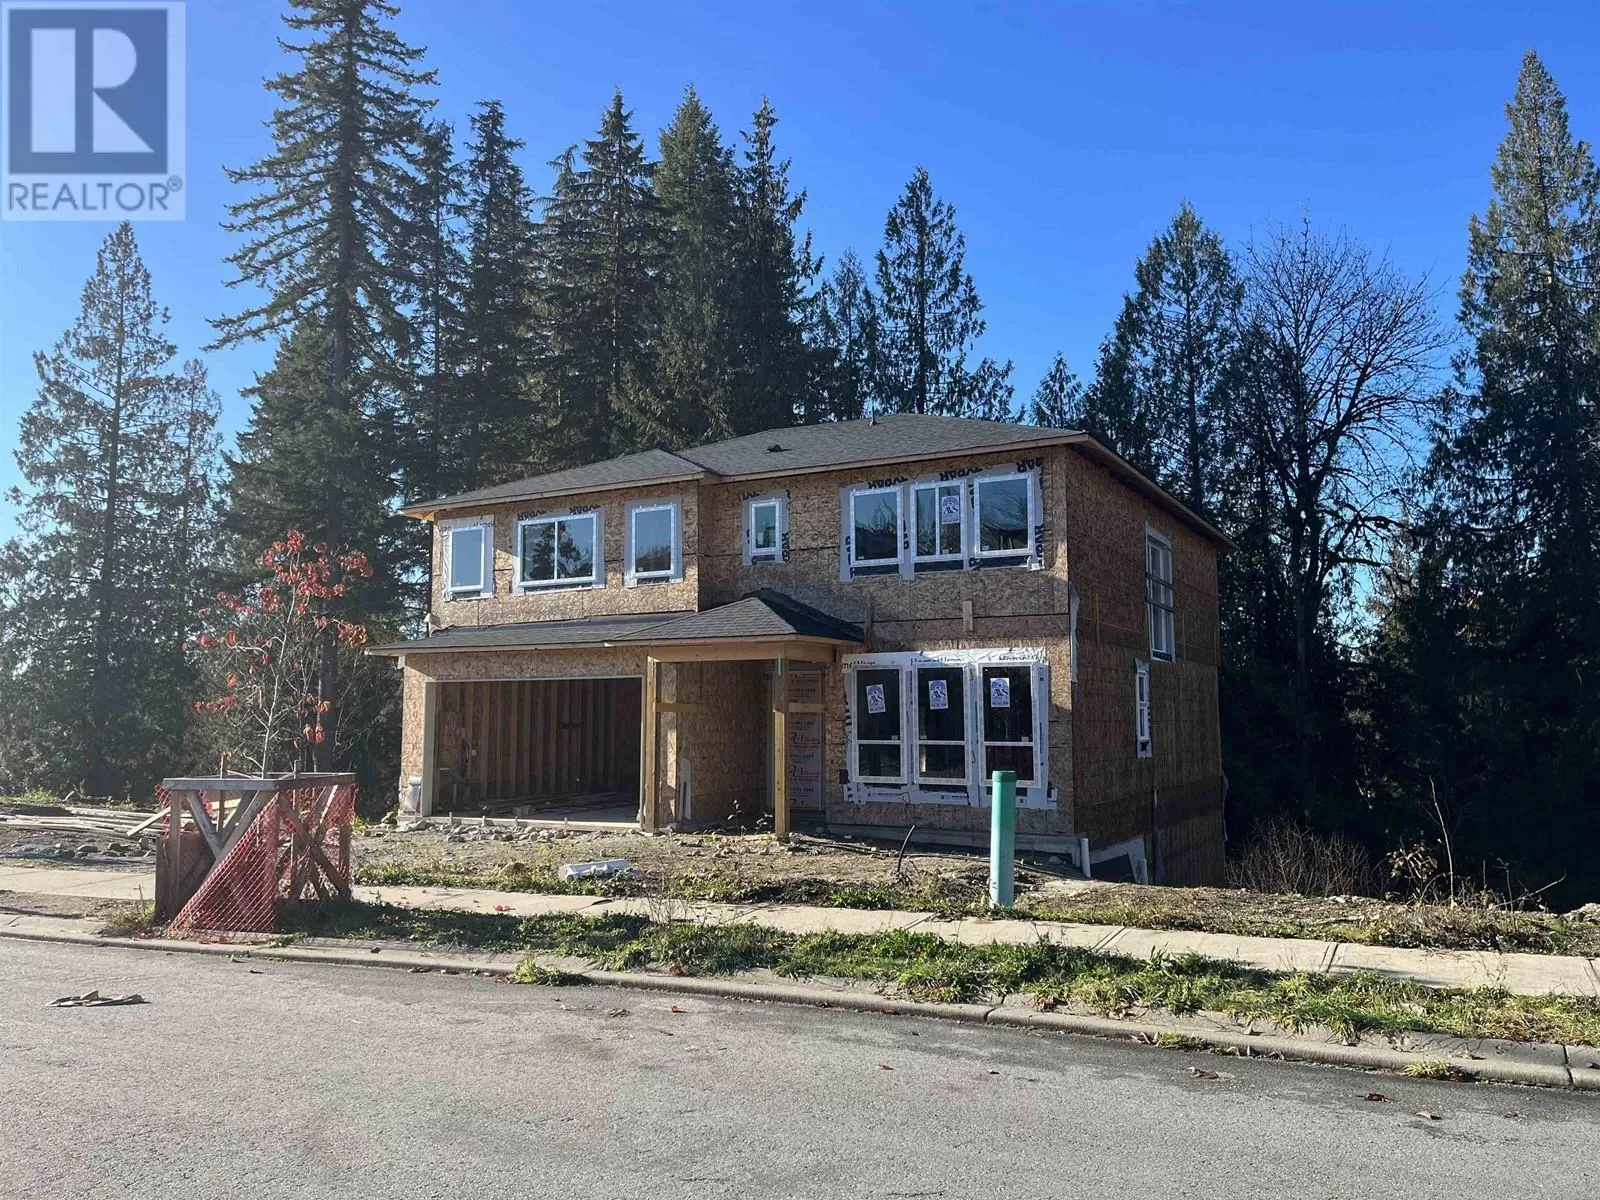 House for rent: 23349 Cross Road, Maple Ridge, British Columbia V4R 0C8